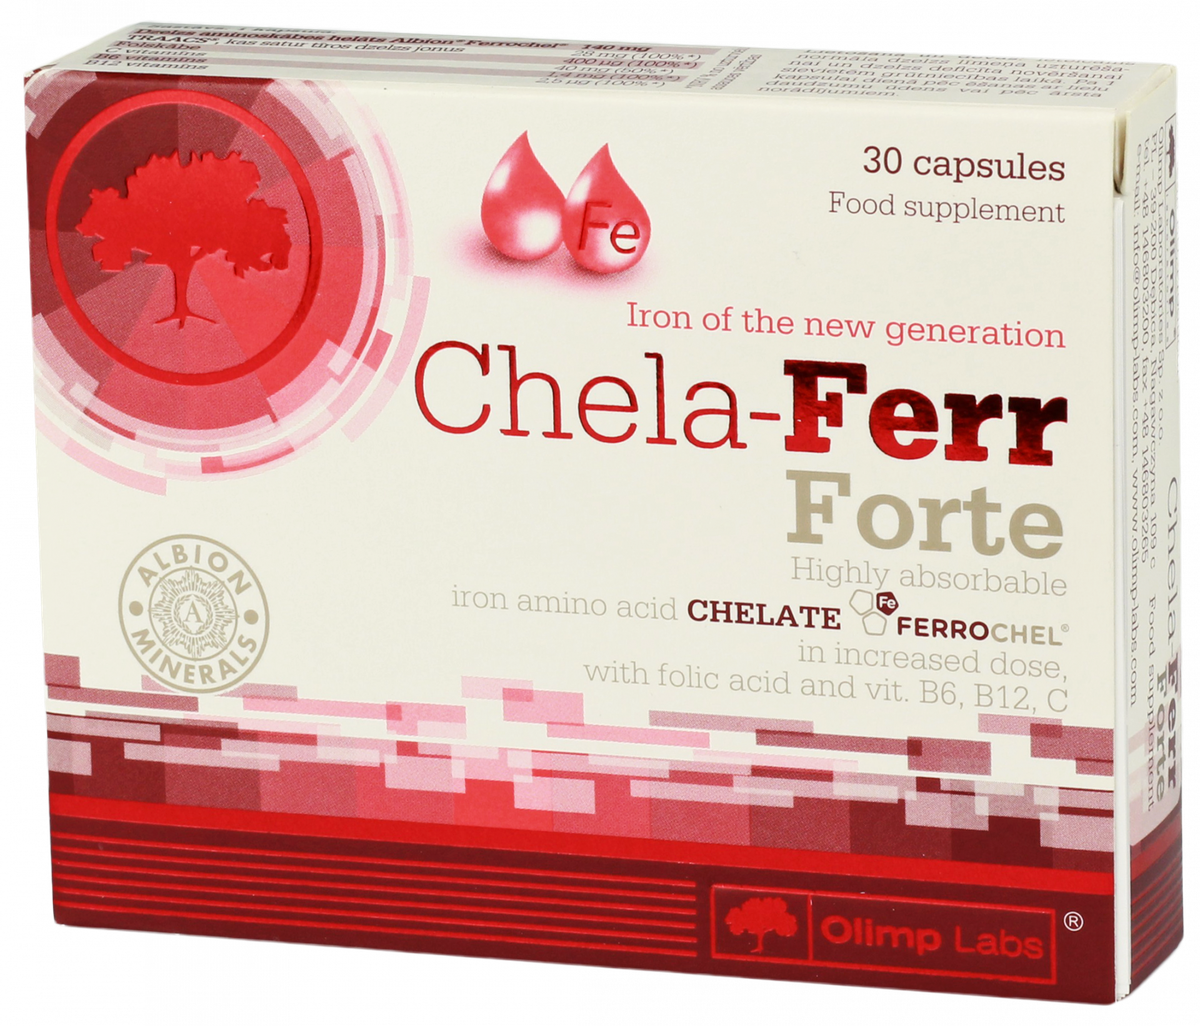 Chela-ferr Forte 30 капс Olimp. Olimp Lab ferr Forte. Olimp Labs Chela ferr Forte 30 капс. Chela ferr Forte отзывы. Глобифер форте купить